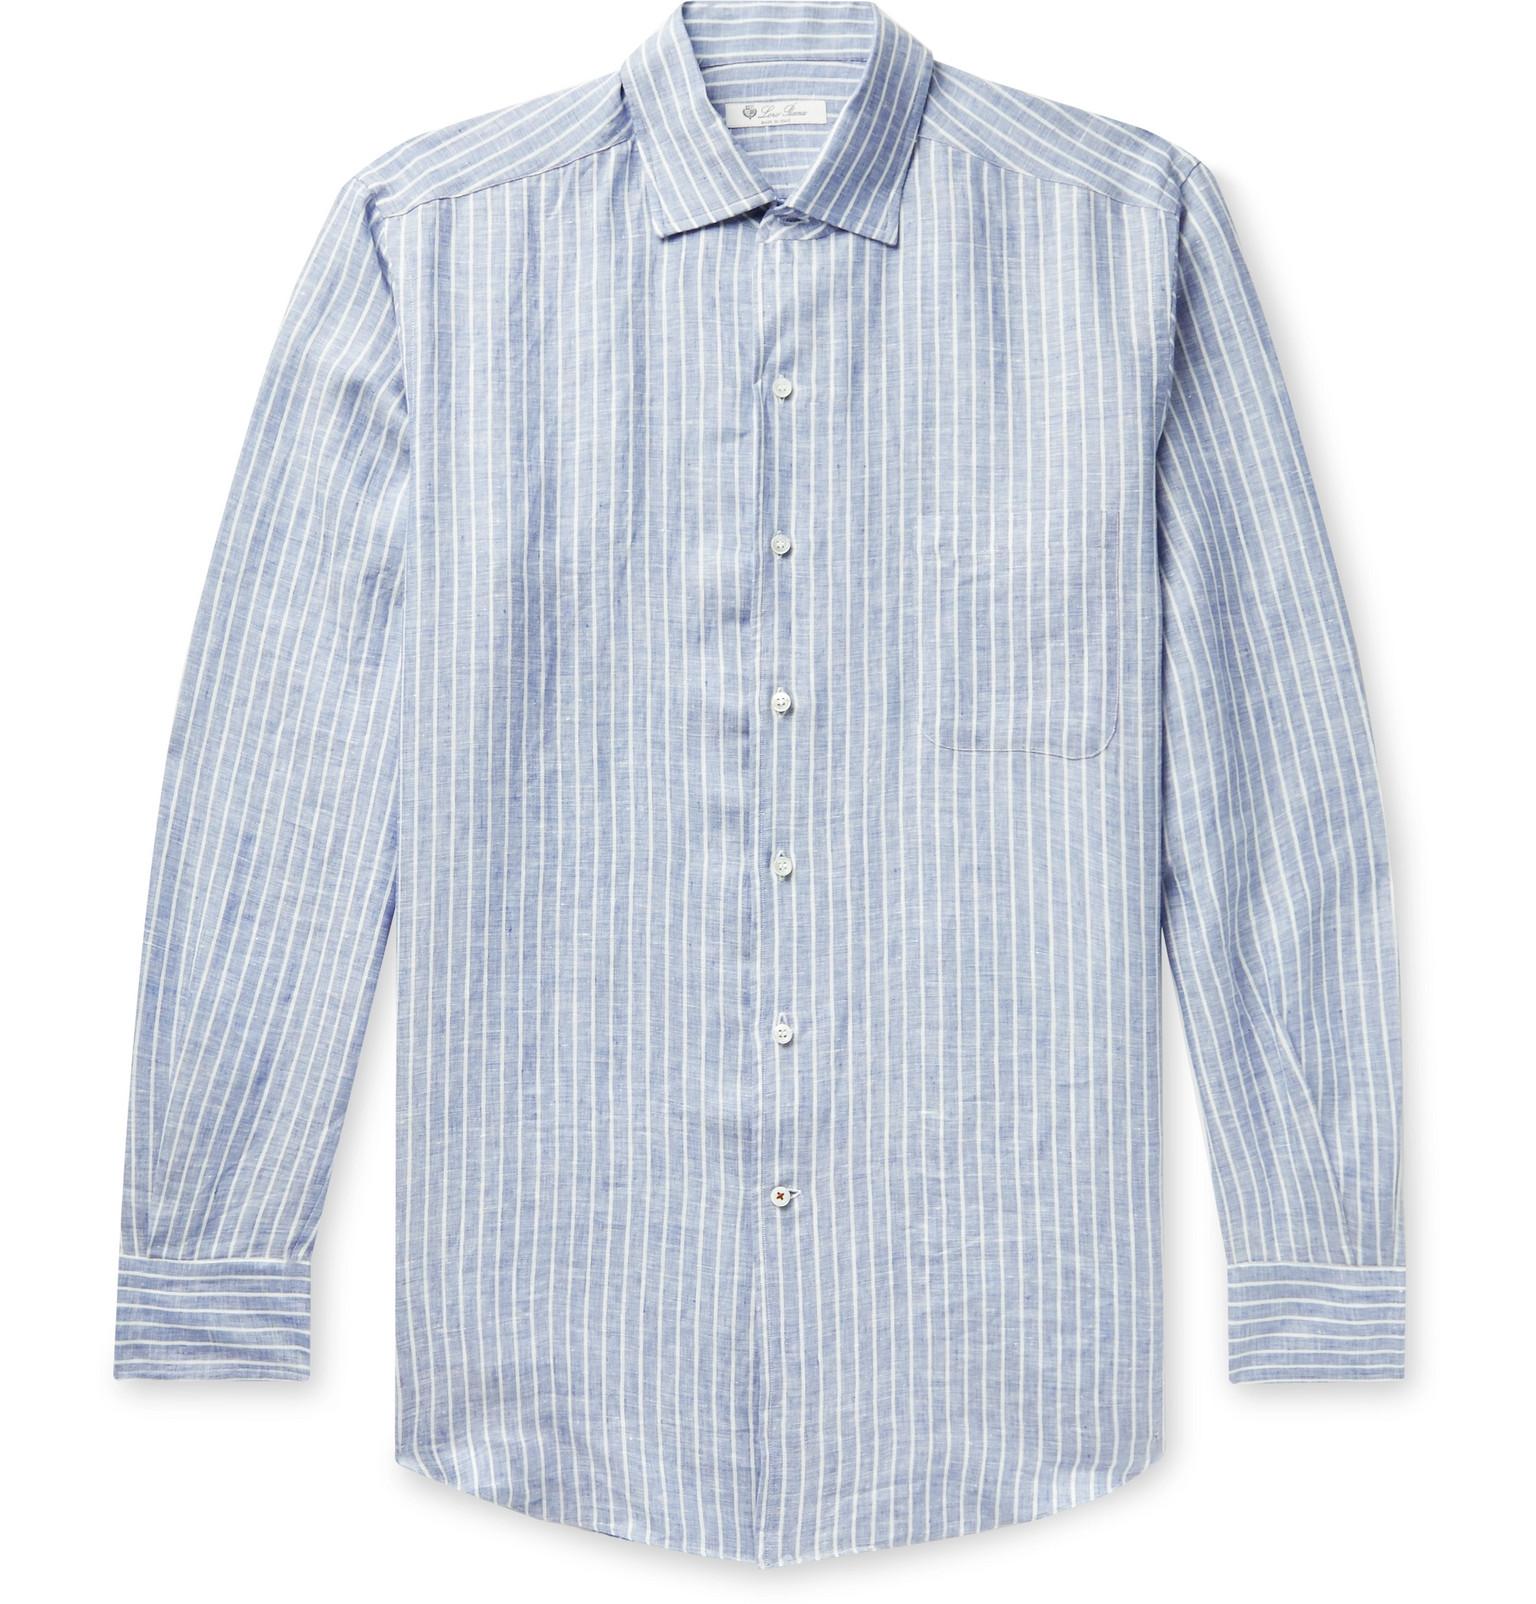 Loro Piana Striped Linen Shirt in Blue for Men - Lyst